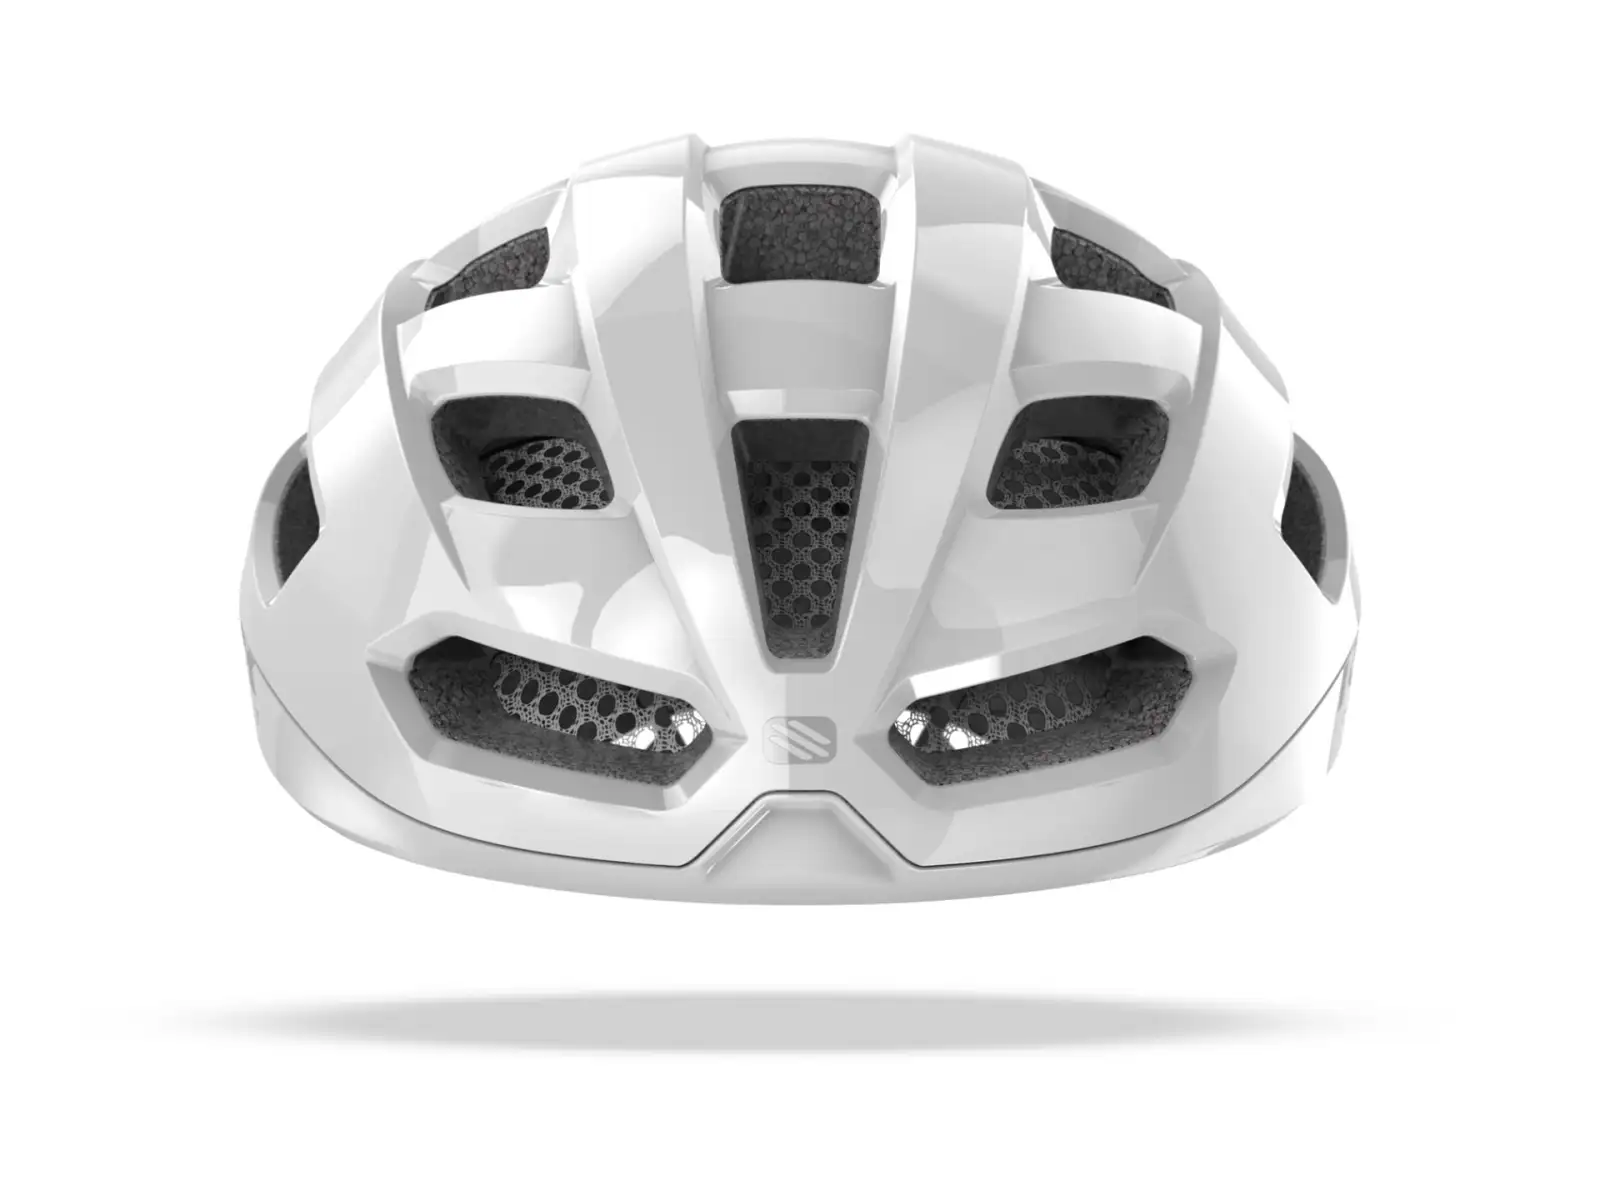 Rudy Project Skudo cyklistická helma bílá